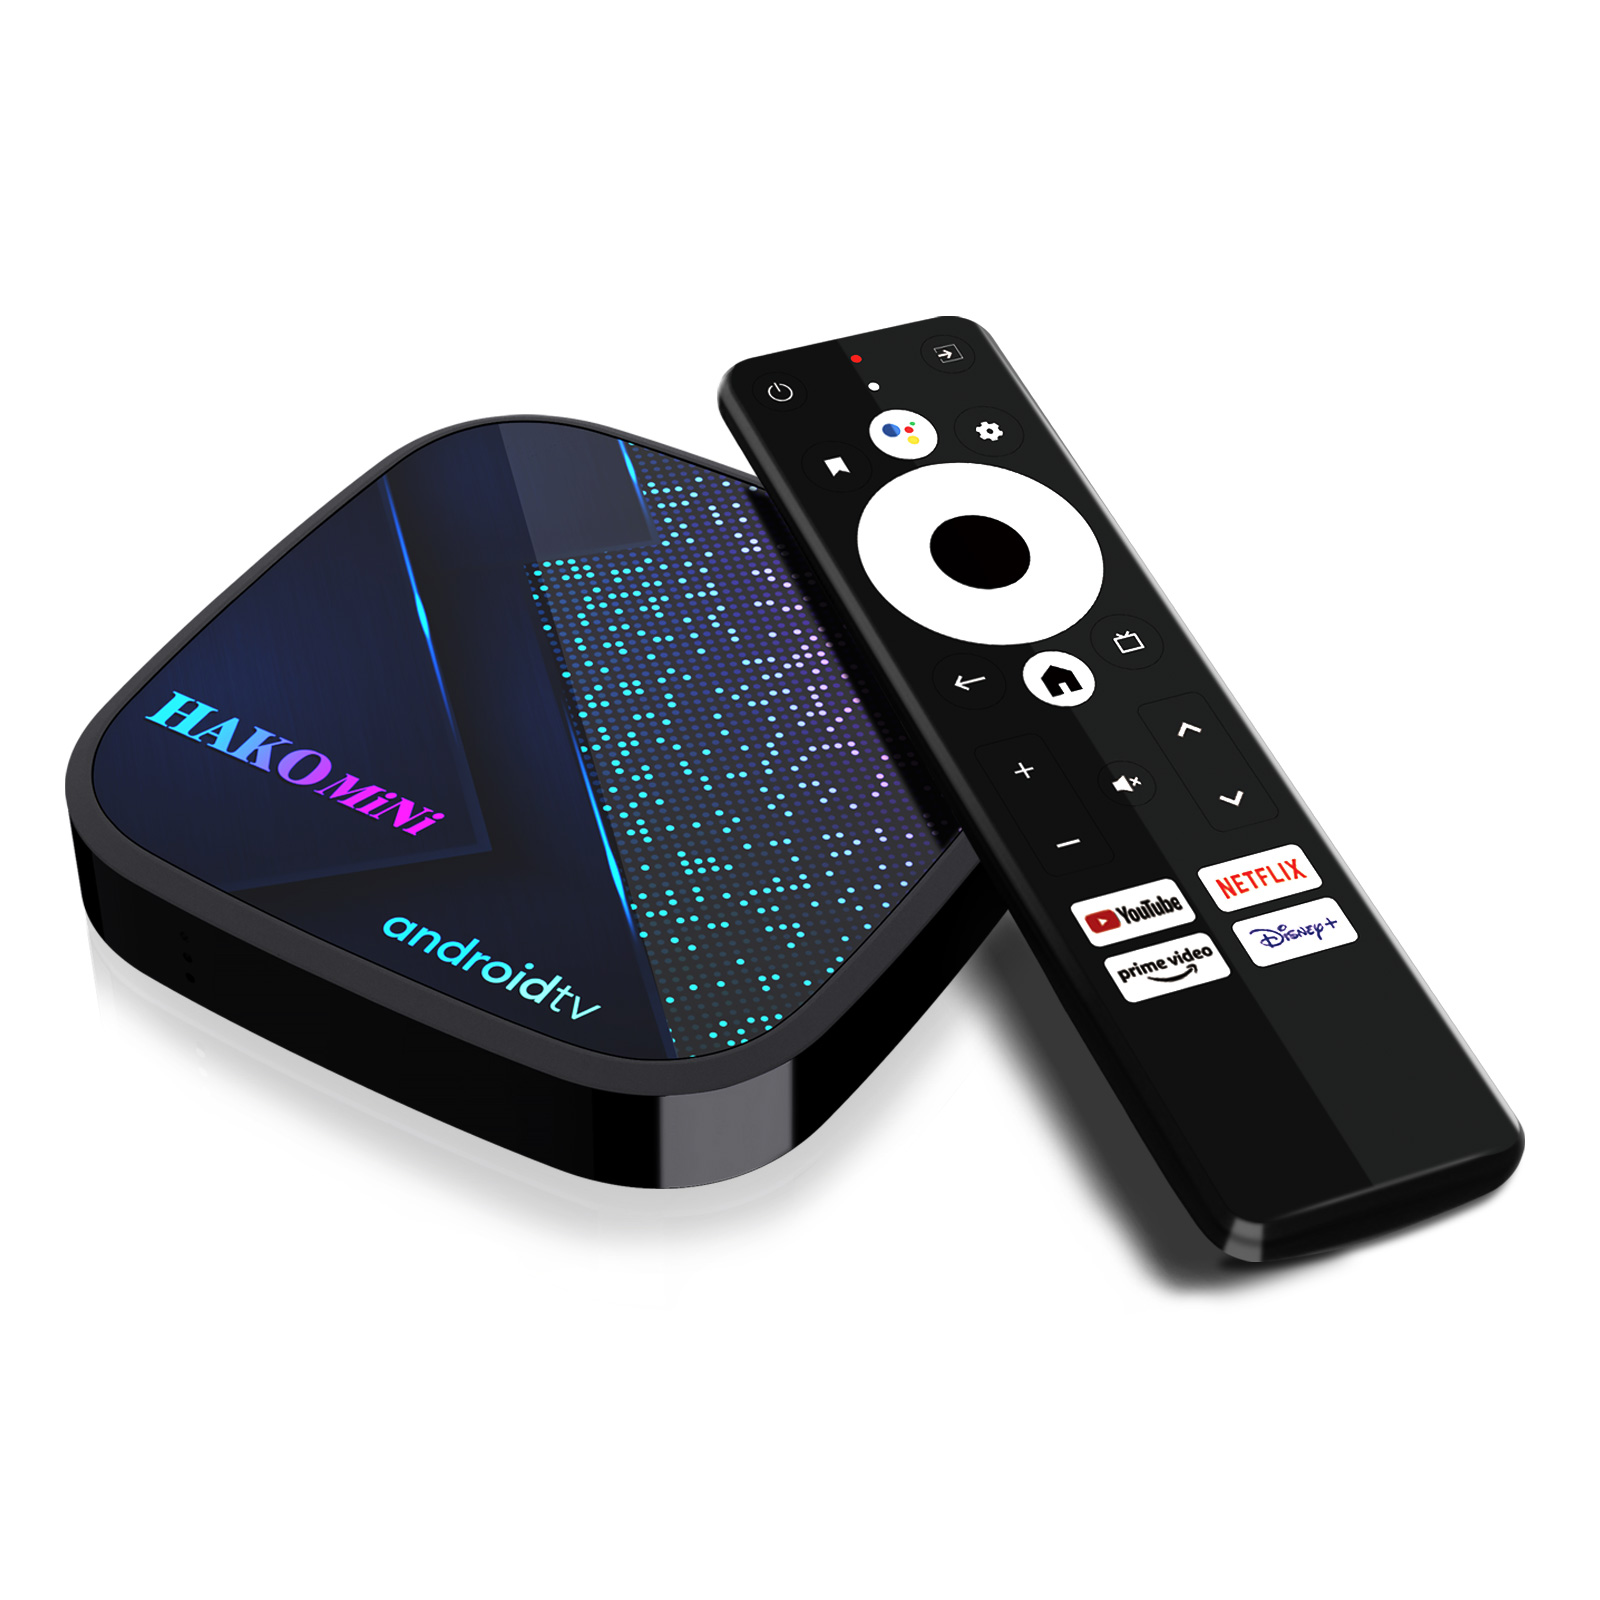 Newest smart tv box android HAKO MINI S905Y4 Google Certified BT5.0 TV Box